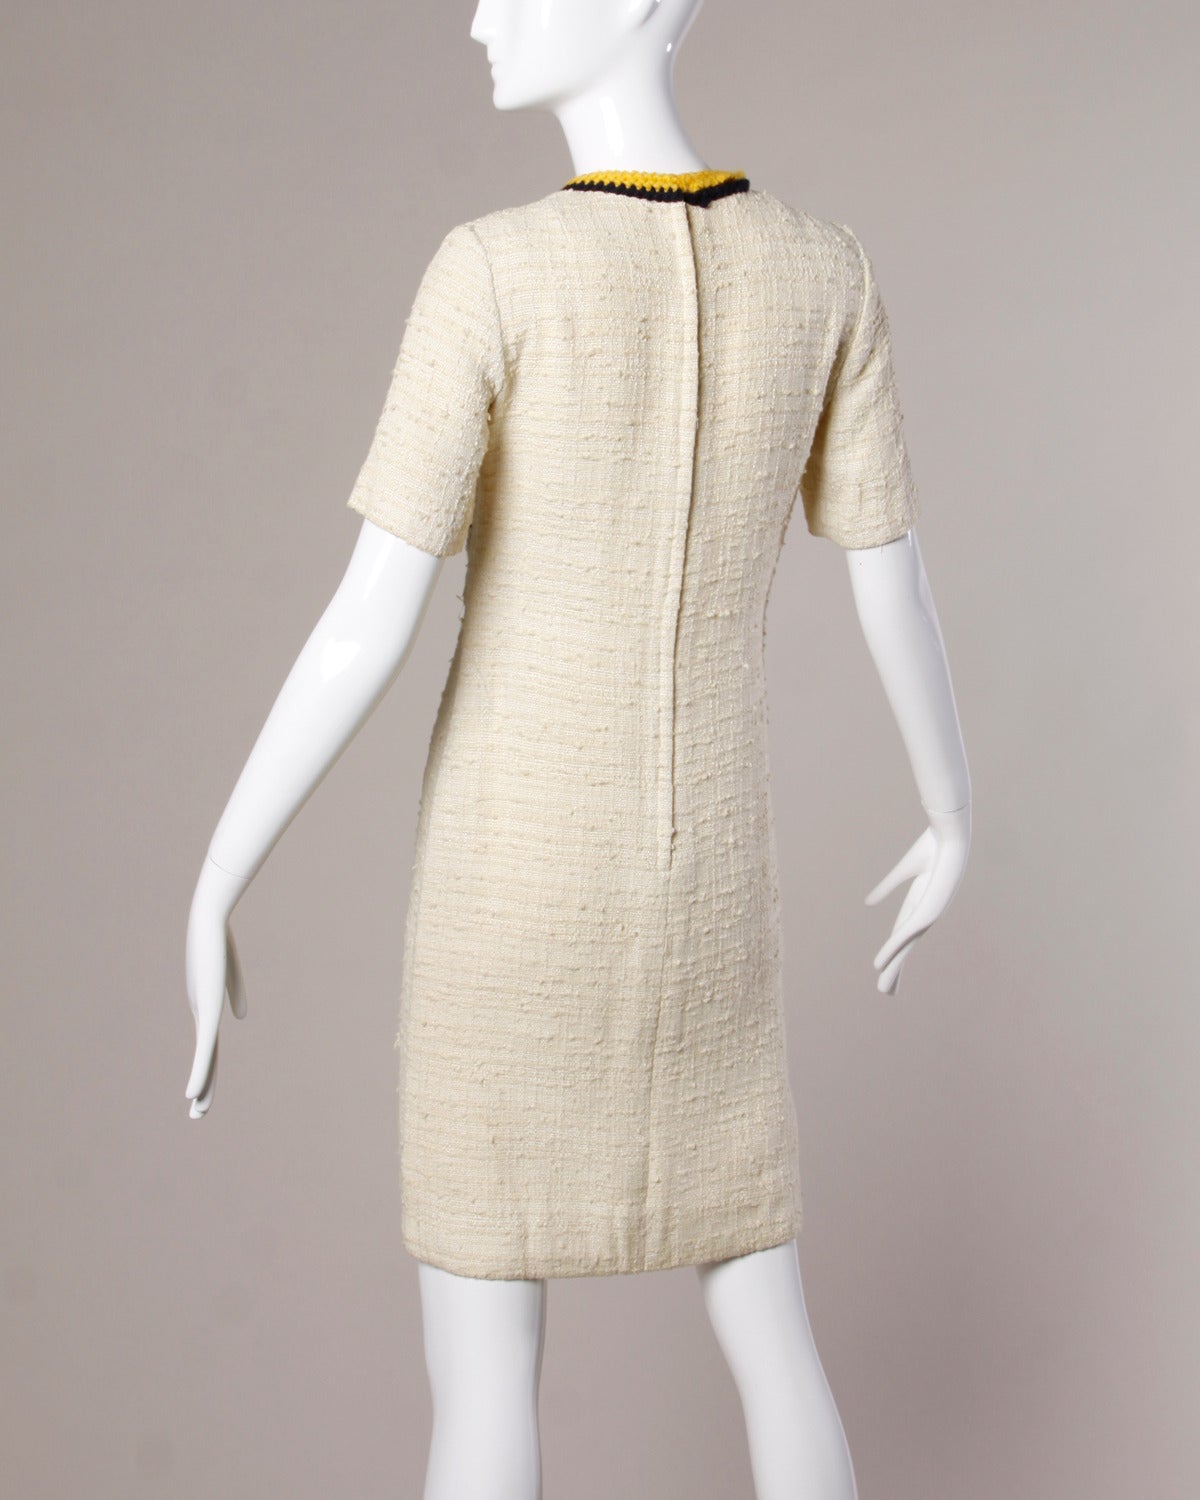 B. Altman Vintage 1960s 60s Military-Inspired Wool + Silk Boucle Shift Dress 2